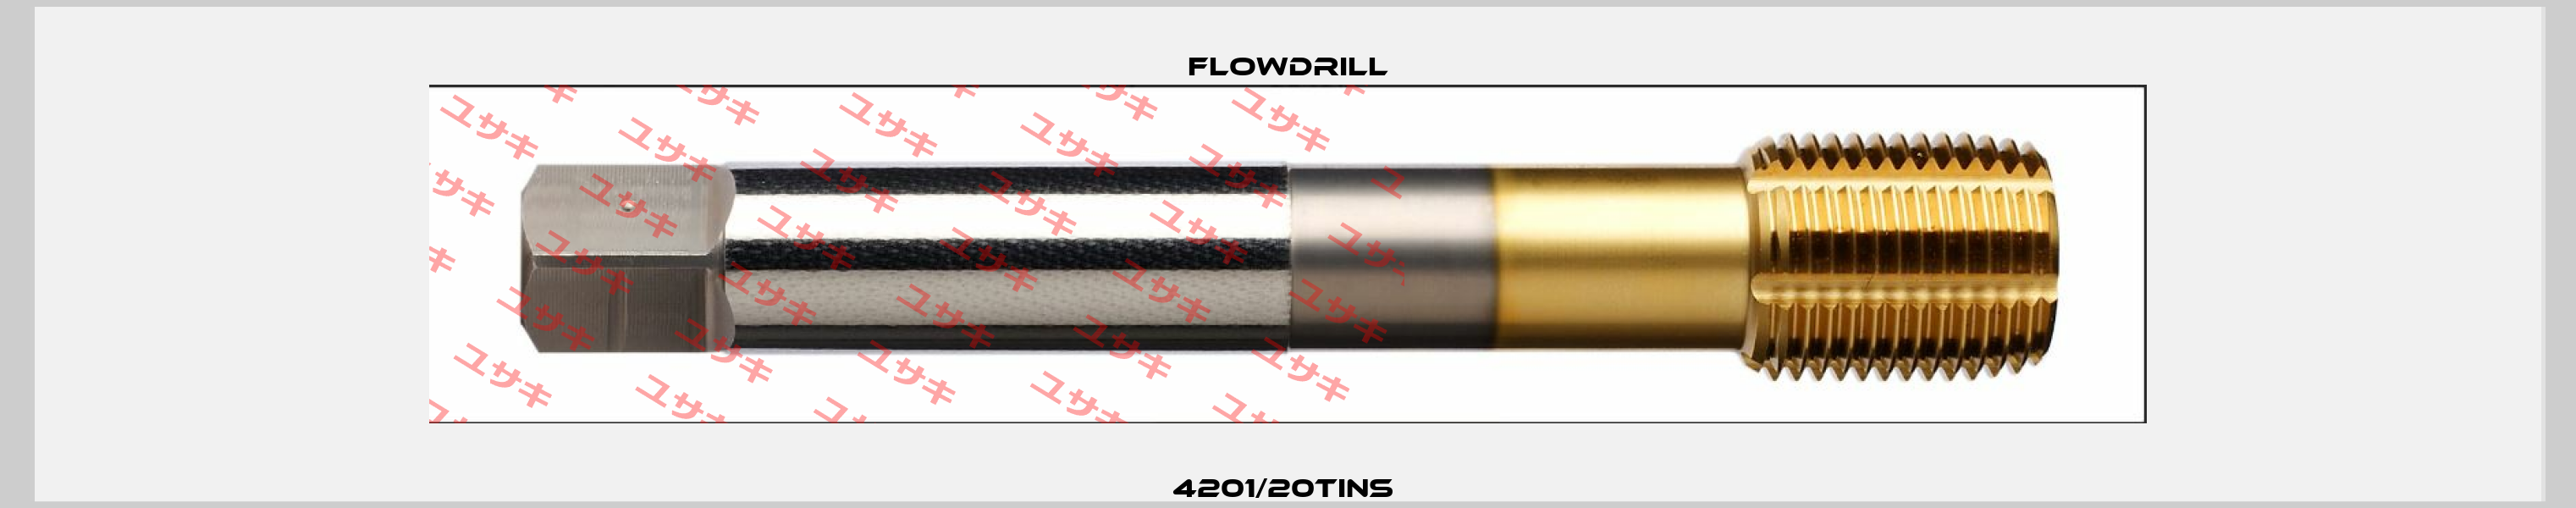 4201/20TINS  Flowdrill